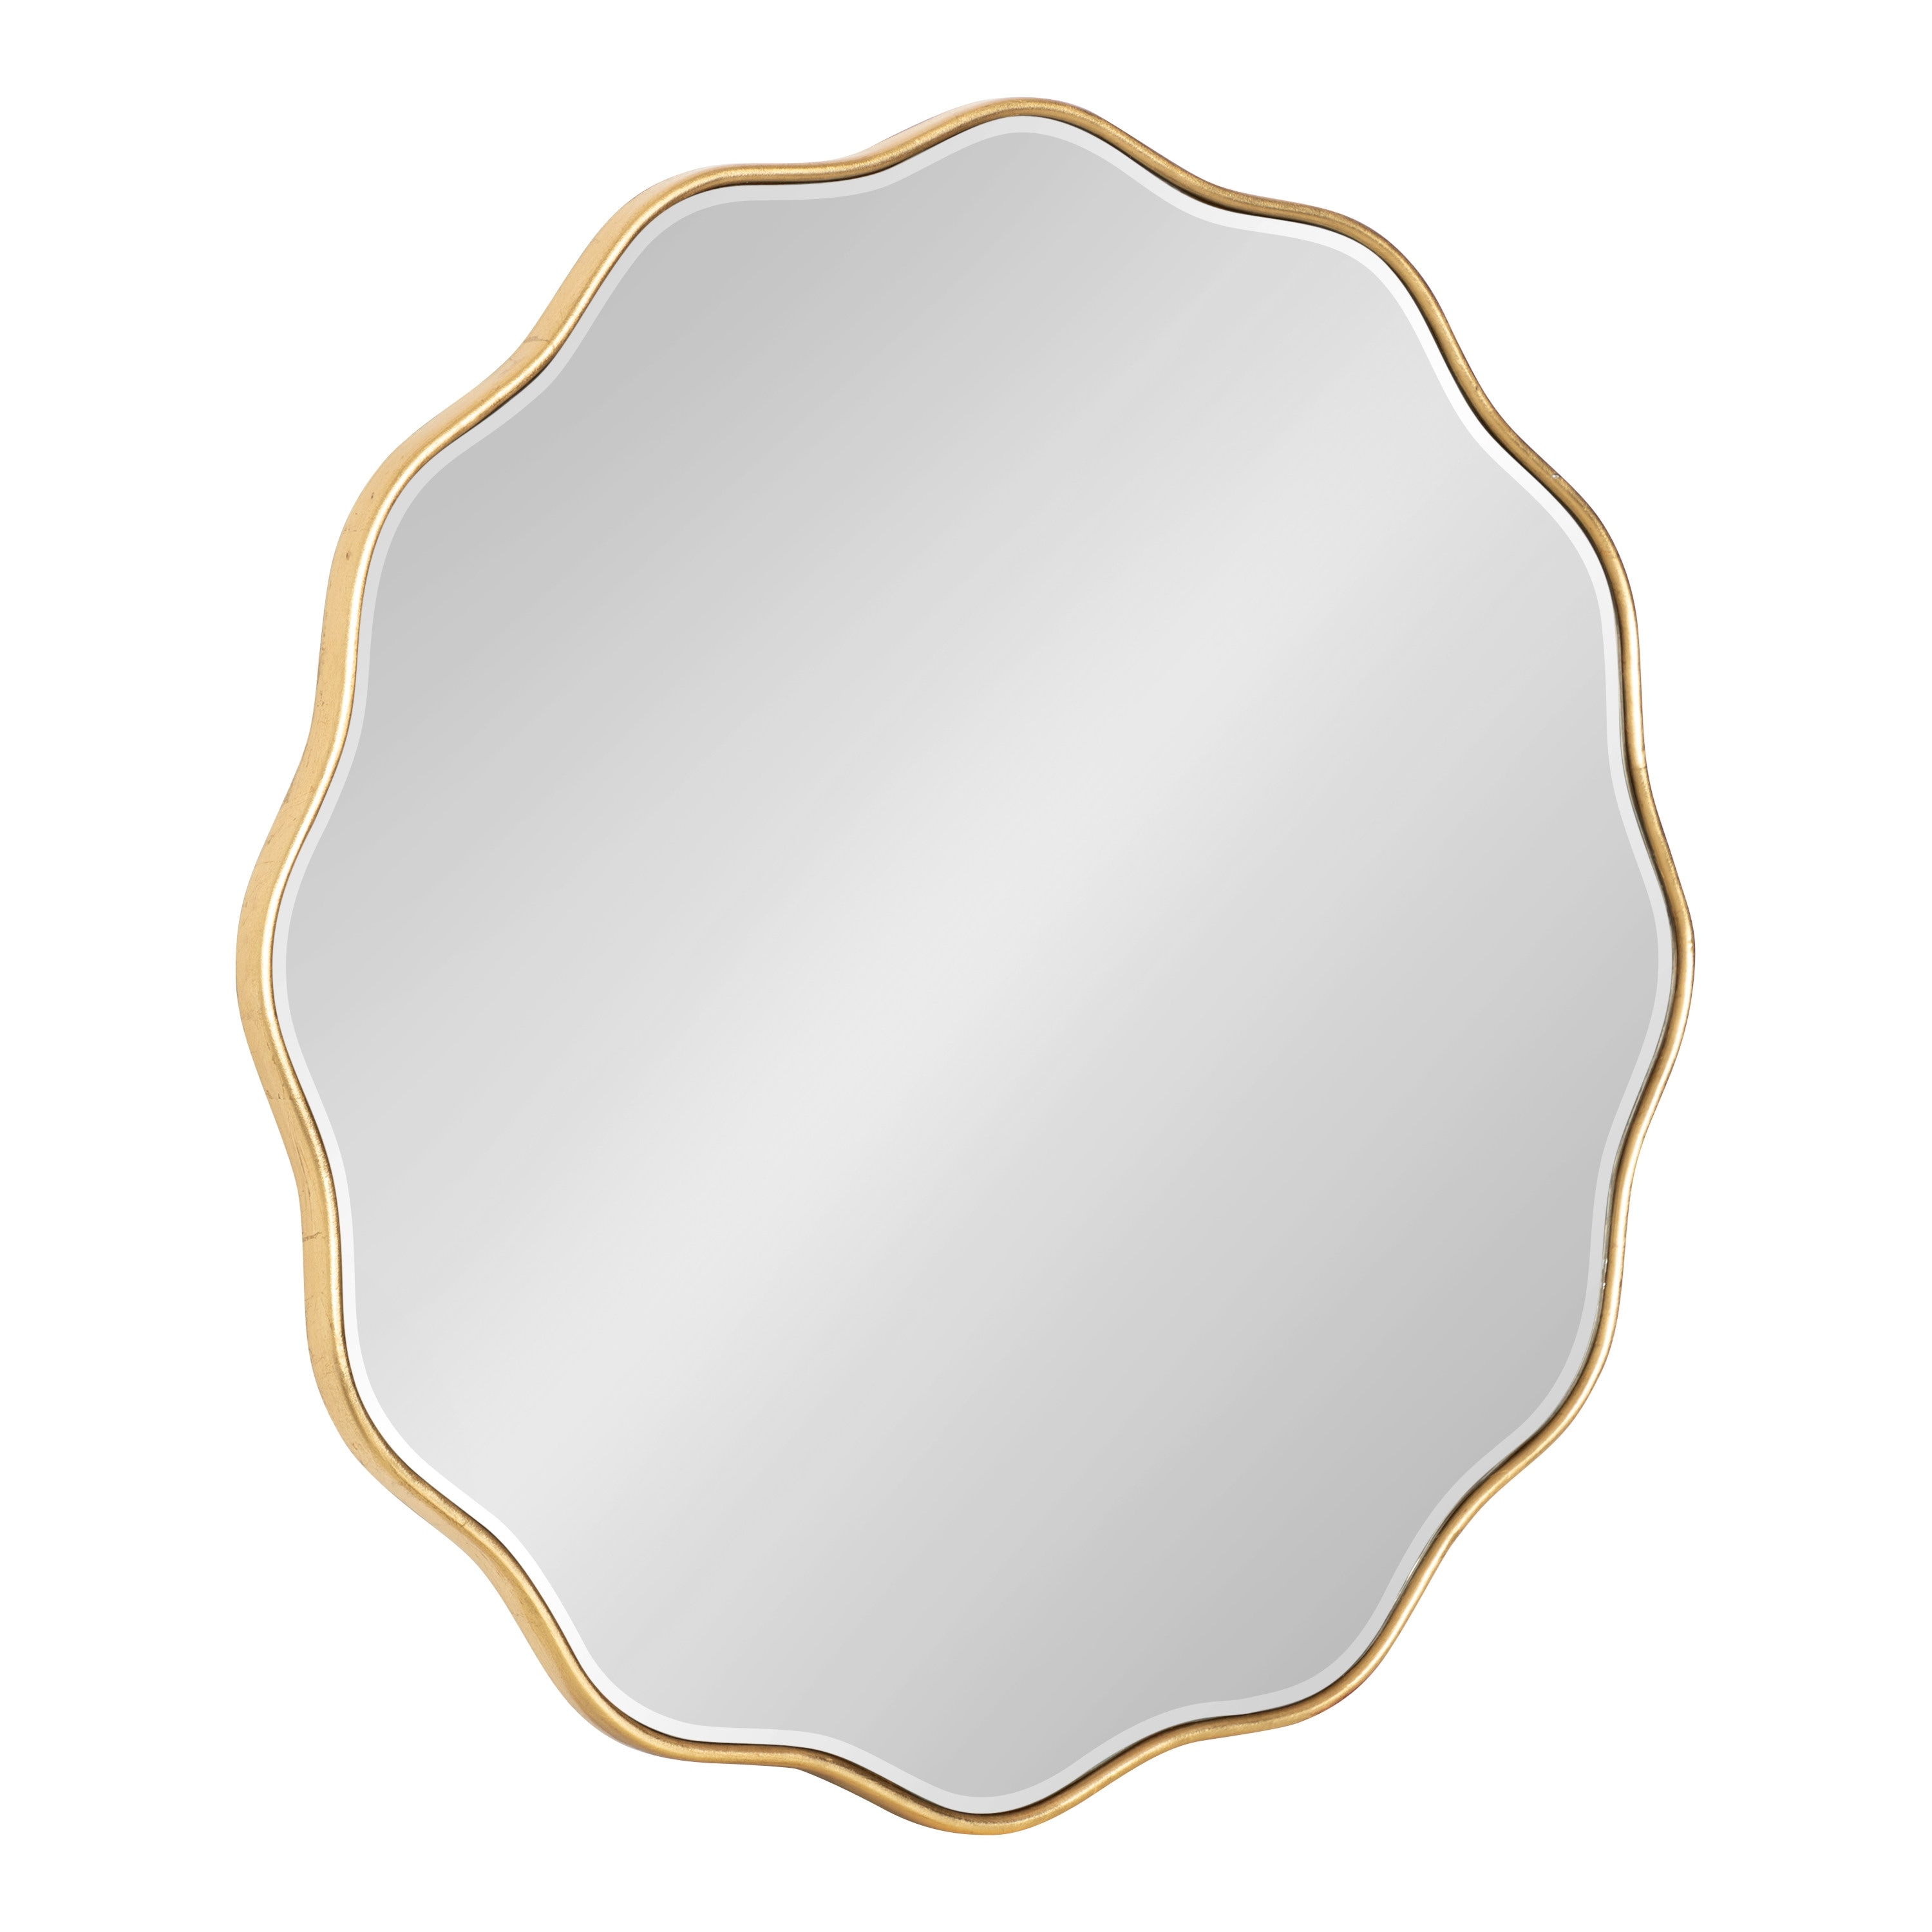 Madison Park Zoe Golden Iron Circle Mirror - Small - 15.35 x 15.35 x  3.15 - Bed Bath & Beyond - 16302596